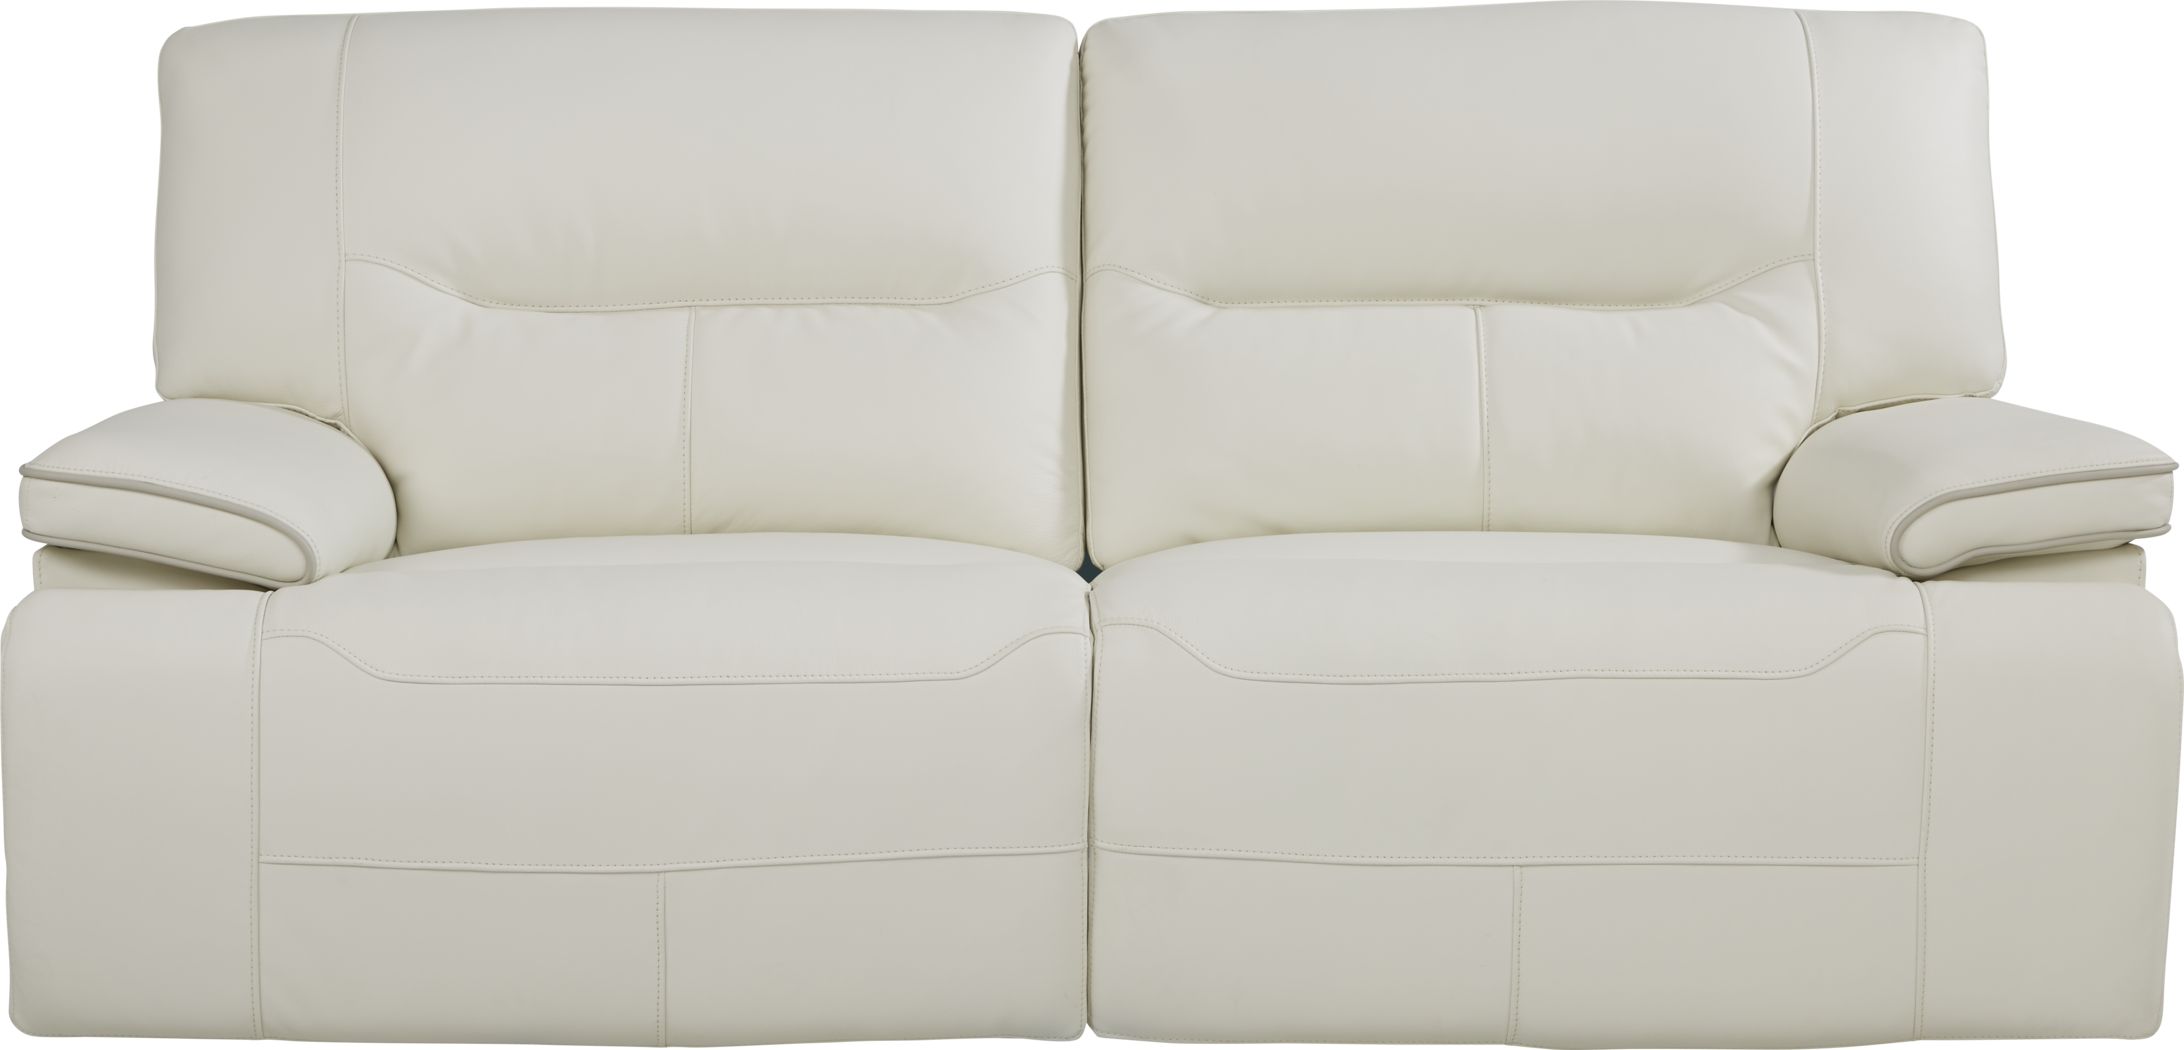 cindy crawford white leather sofa